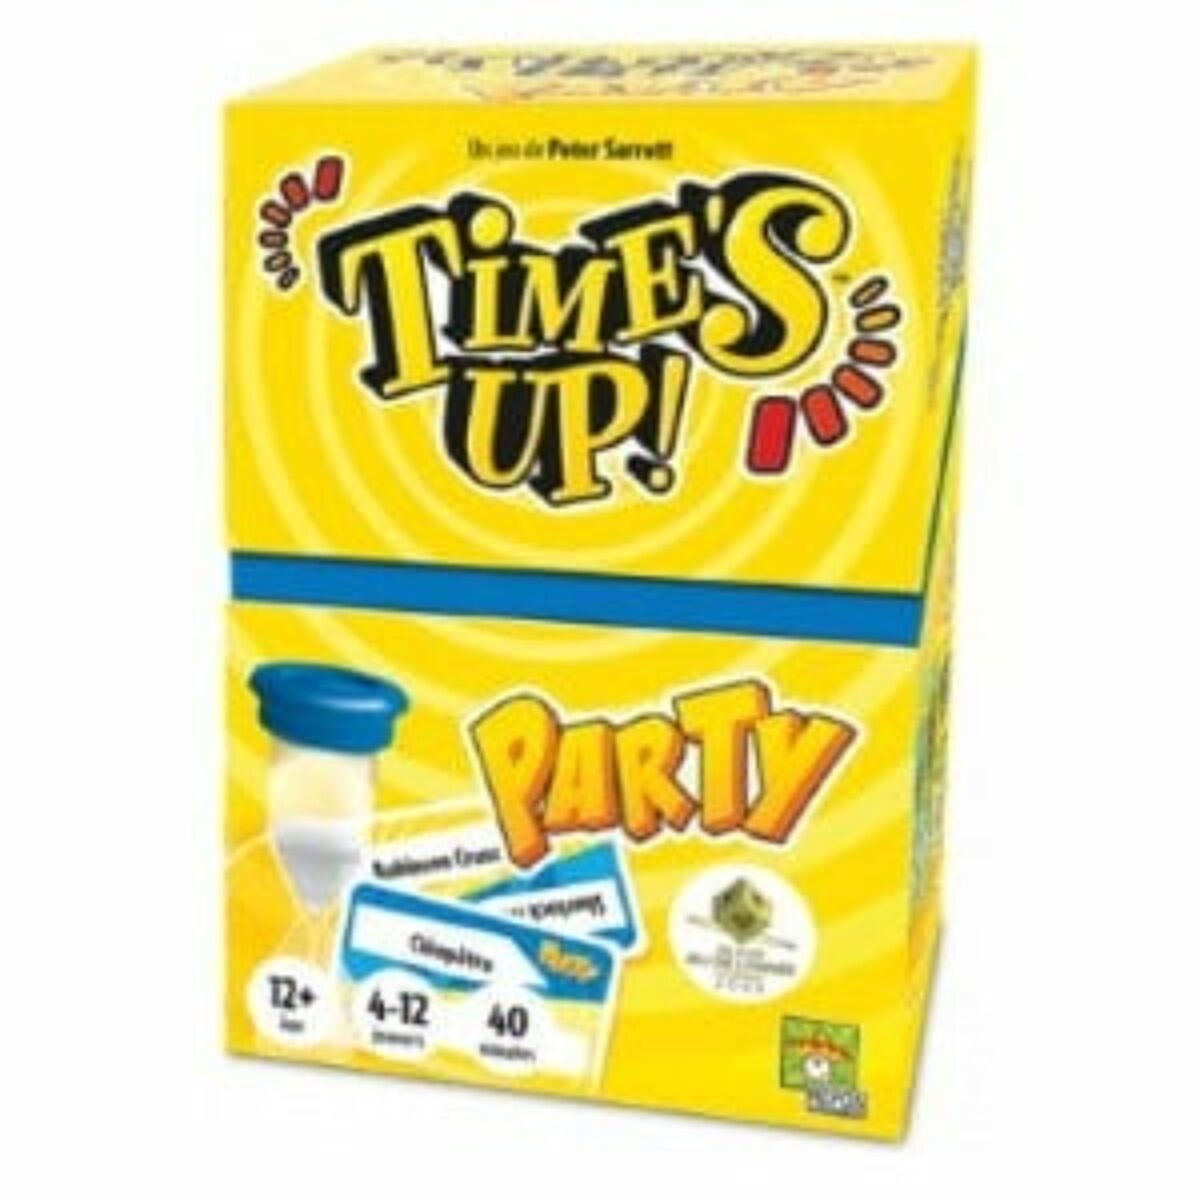 Time's Up ! Family Asmodée Nouvelle Version - Jeux d'ambiance